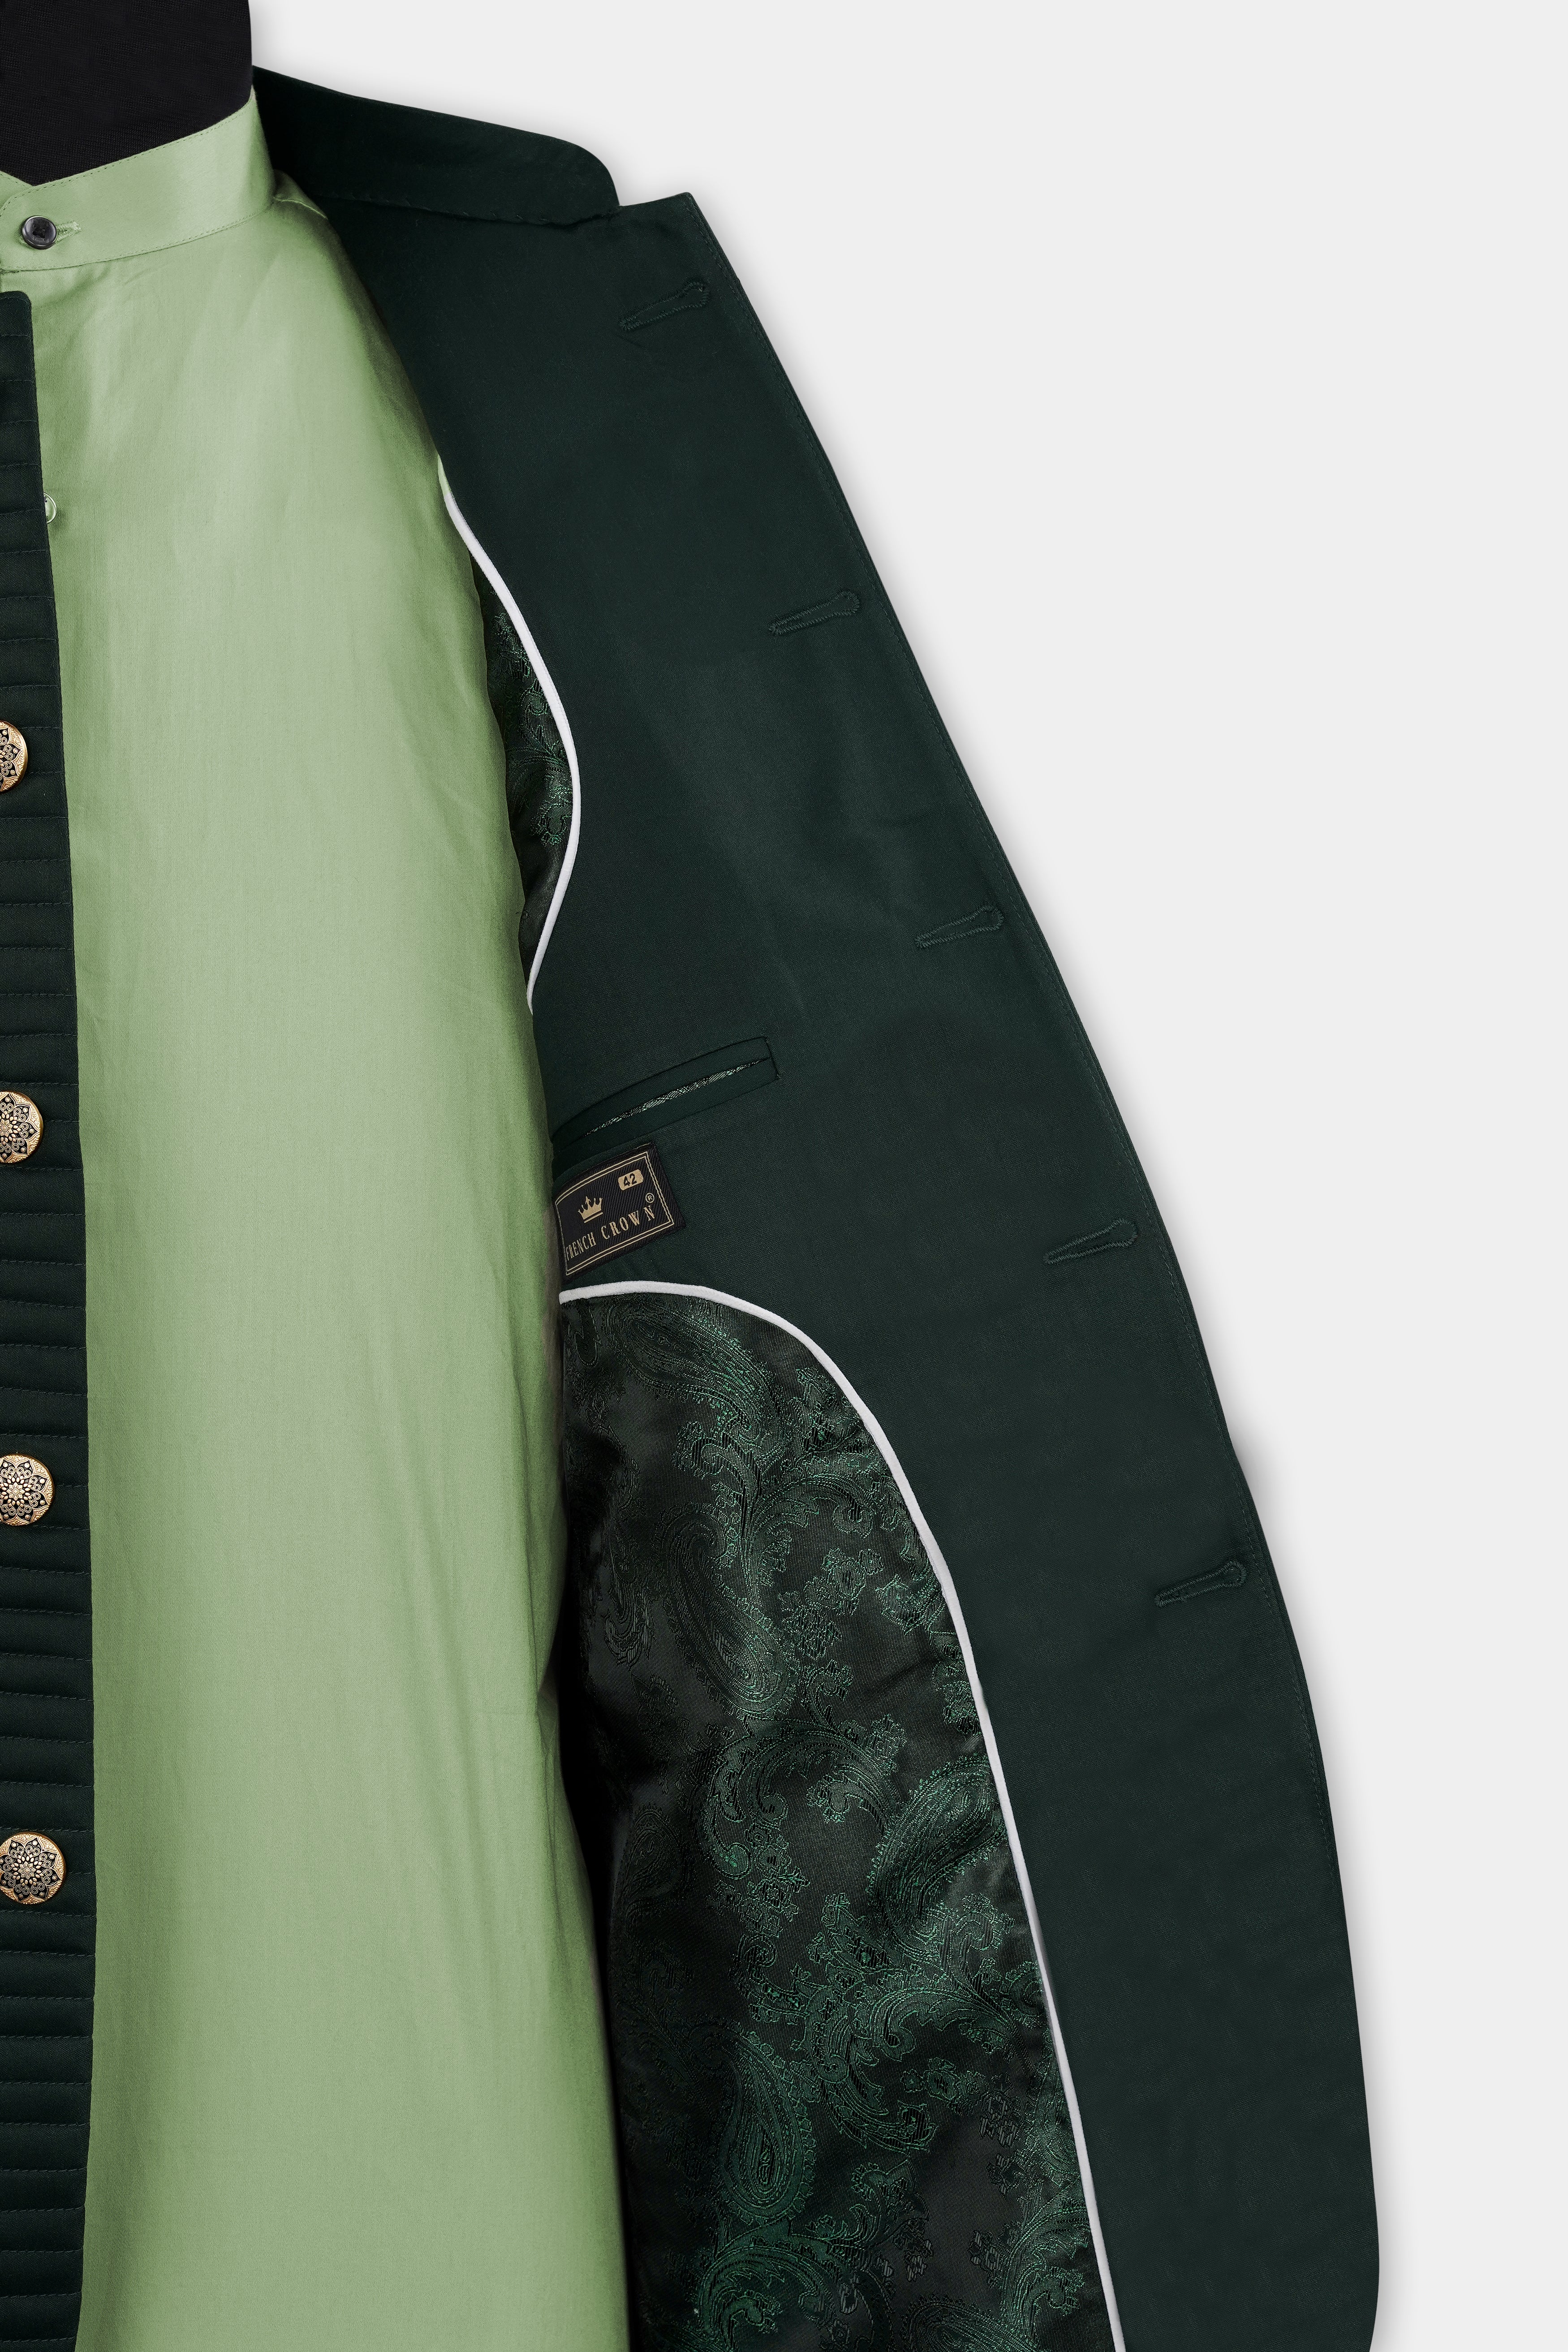 Dark Slate Green with Horizontal Stitched Wool Rich Bandhgala Designer Suit ST3035-BG-D168-36, ST3035-BG-D168-38, ST3035-BG-D168-40, ST3035-BG-D168-42, ST3035-BG-D168-44, ST3035-BG-D168-46, ST3035-BG-D168-48, ST3035-BG-D168-50, ST3035-BG-D168-52, ST3035-BG-D168-54, ST3035-BG-D168-56, ST3035-BG-D168-58, ST3035-BG-D168-60